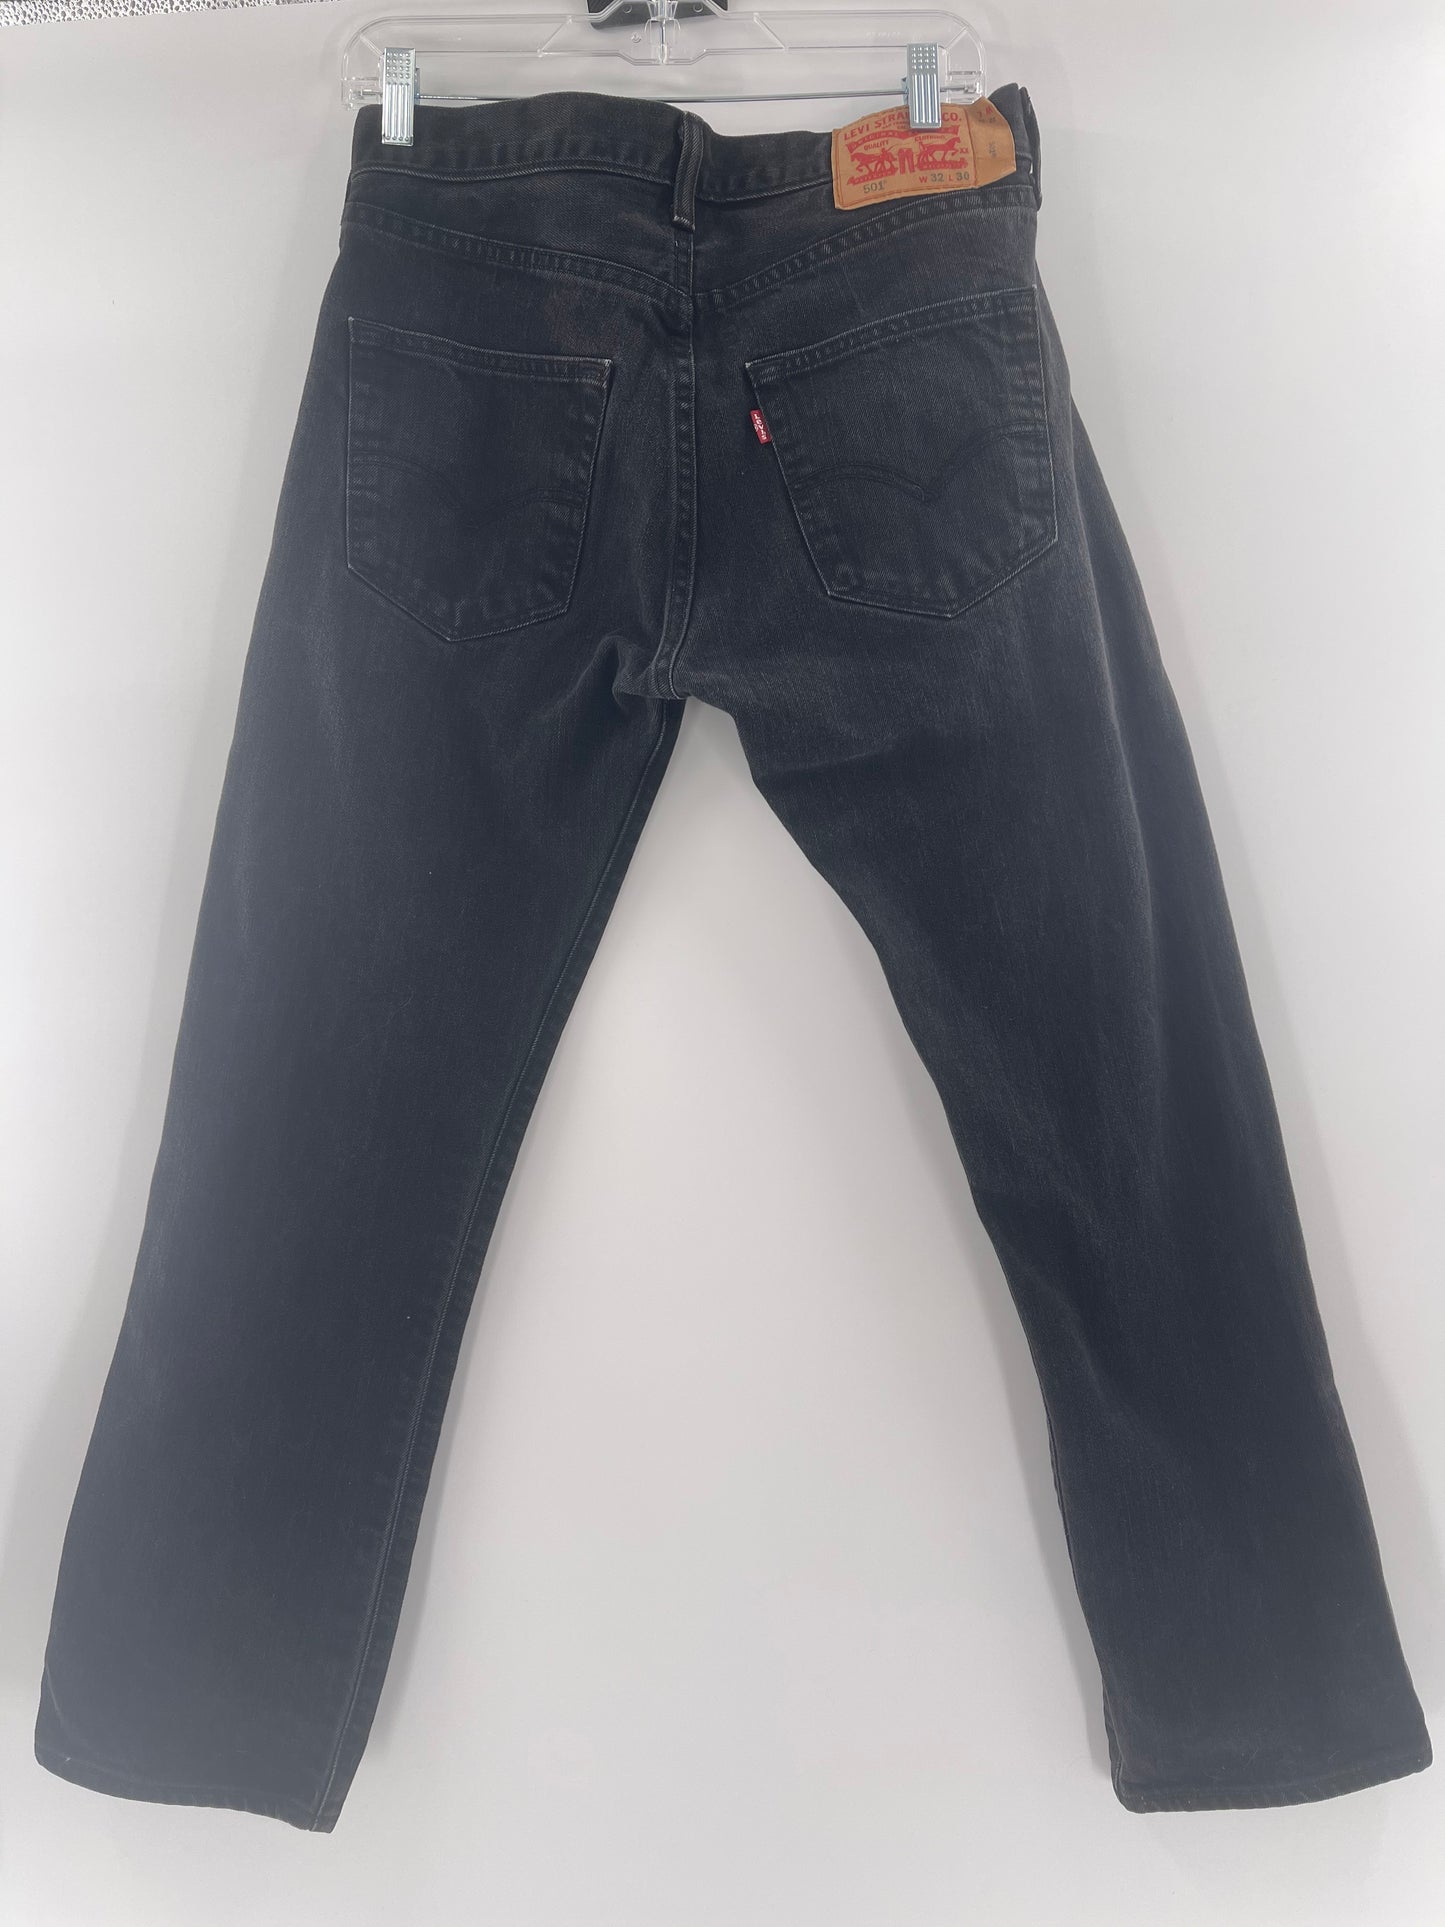 Vintage Levi Strauss Black Jeans (Size 32 x 30)